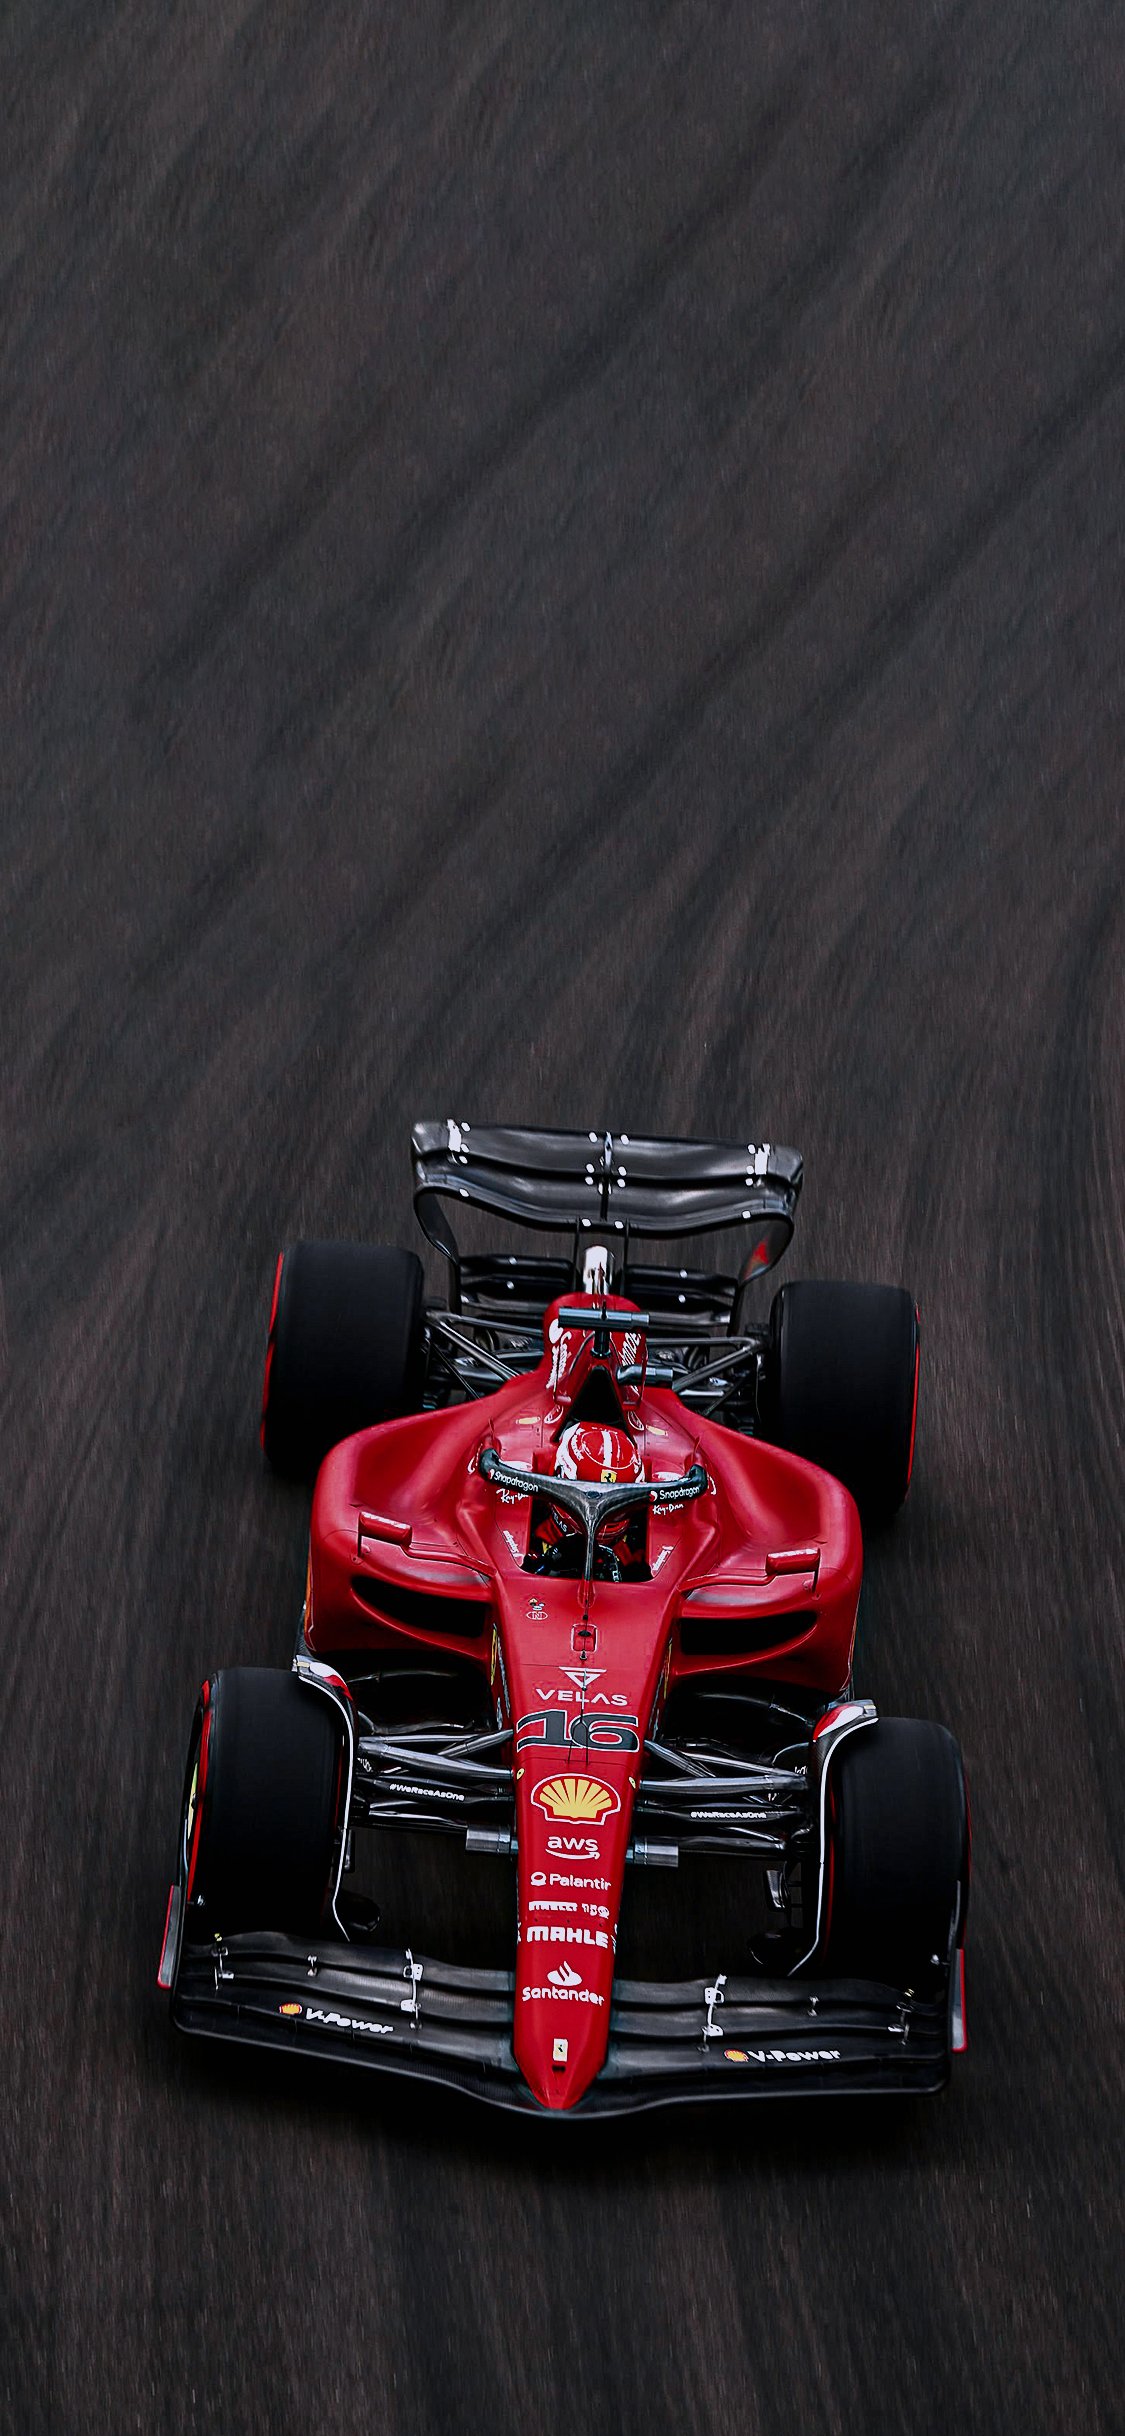 Ferrari F1-75 2022 Wallpaper  Sports cars ferrari, Ferrari car